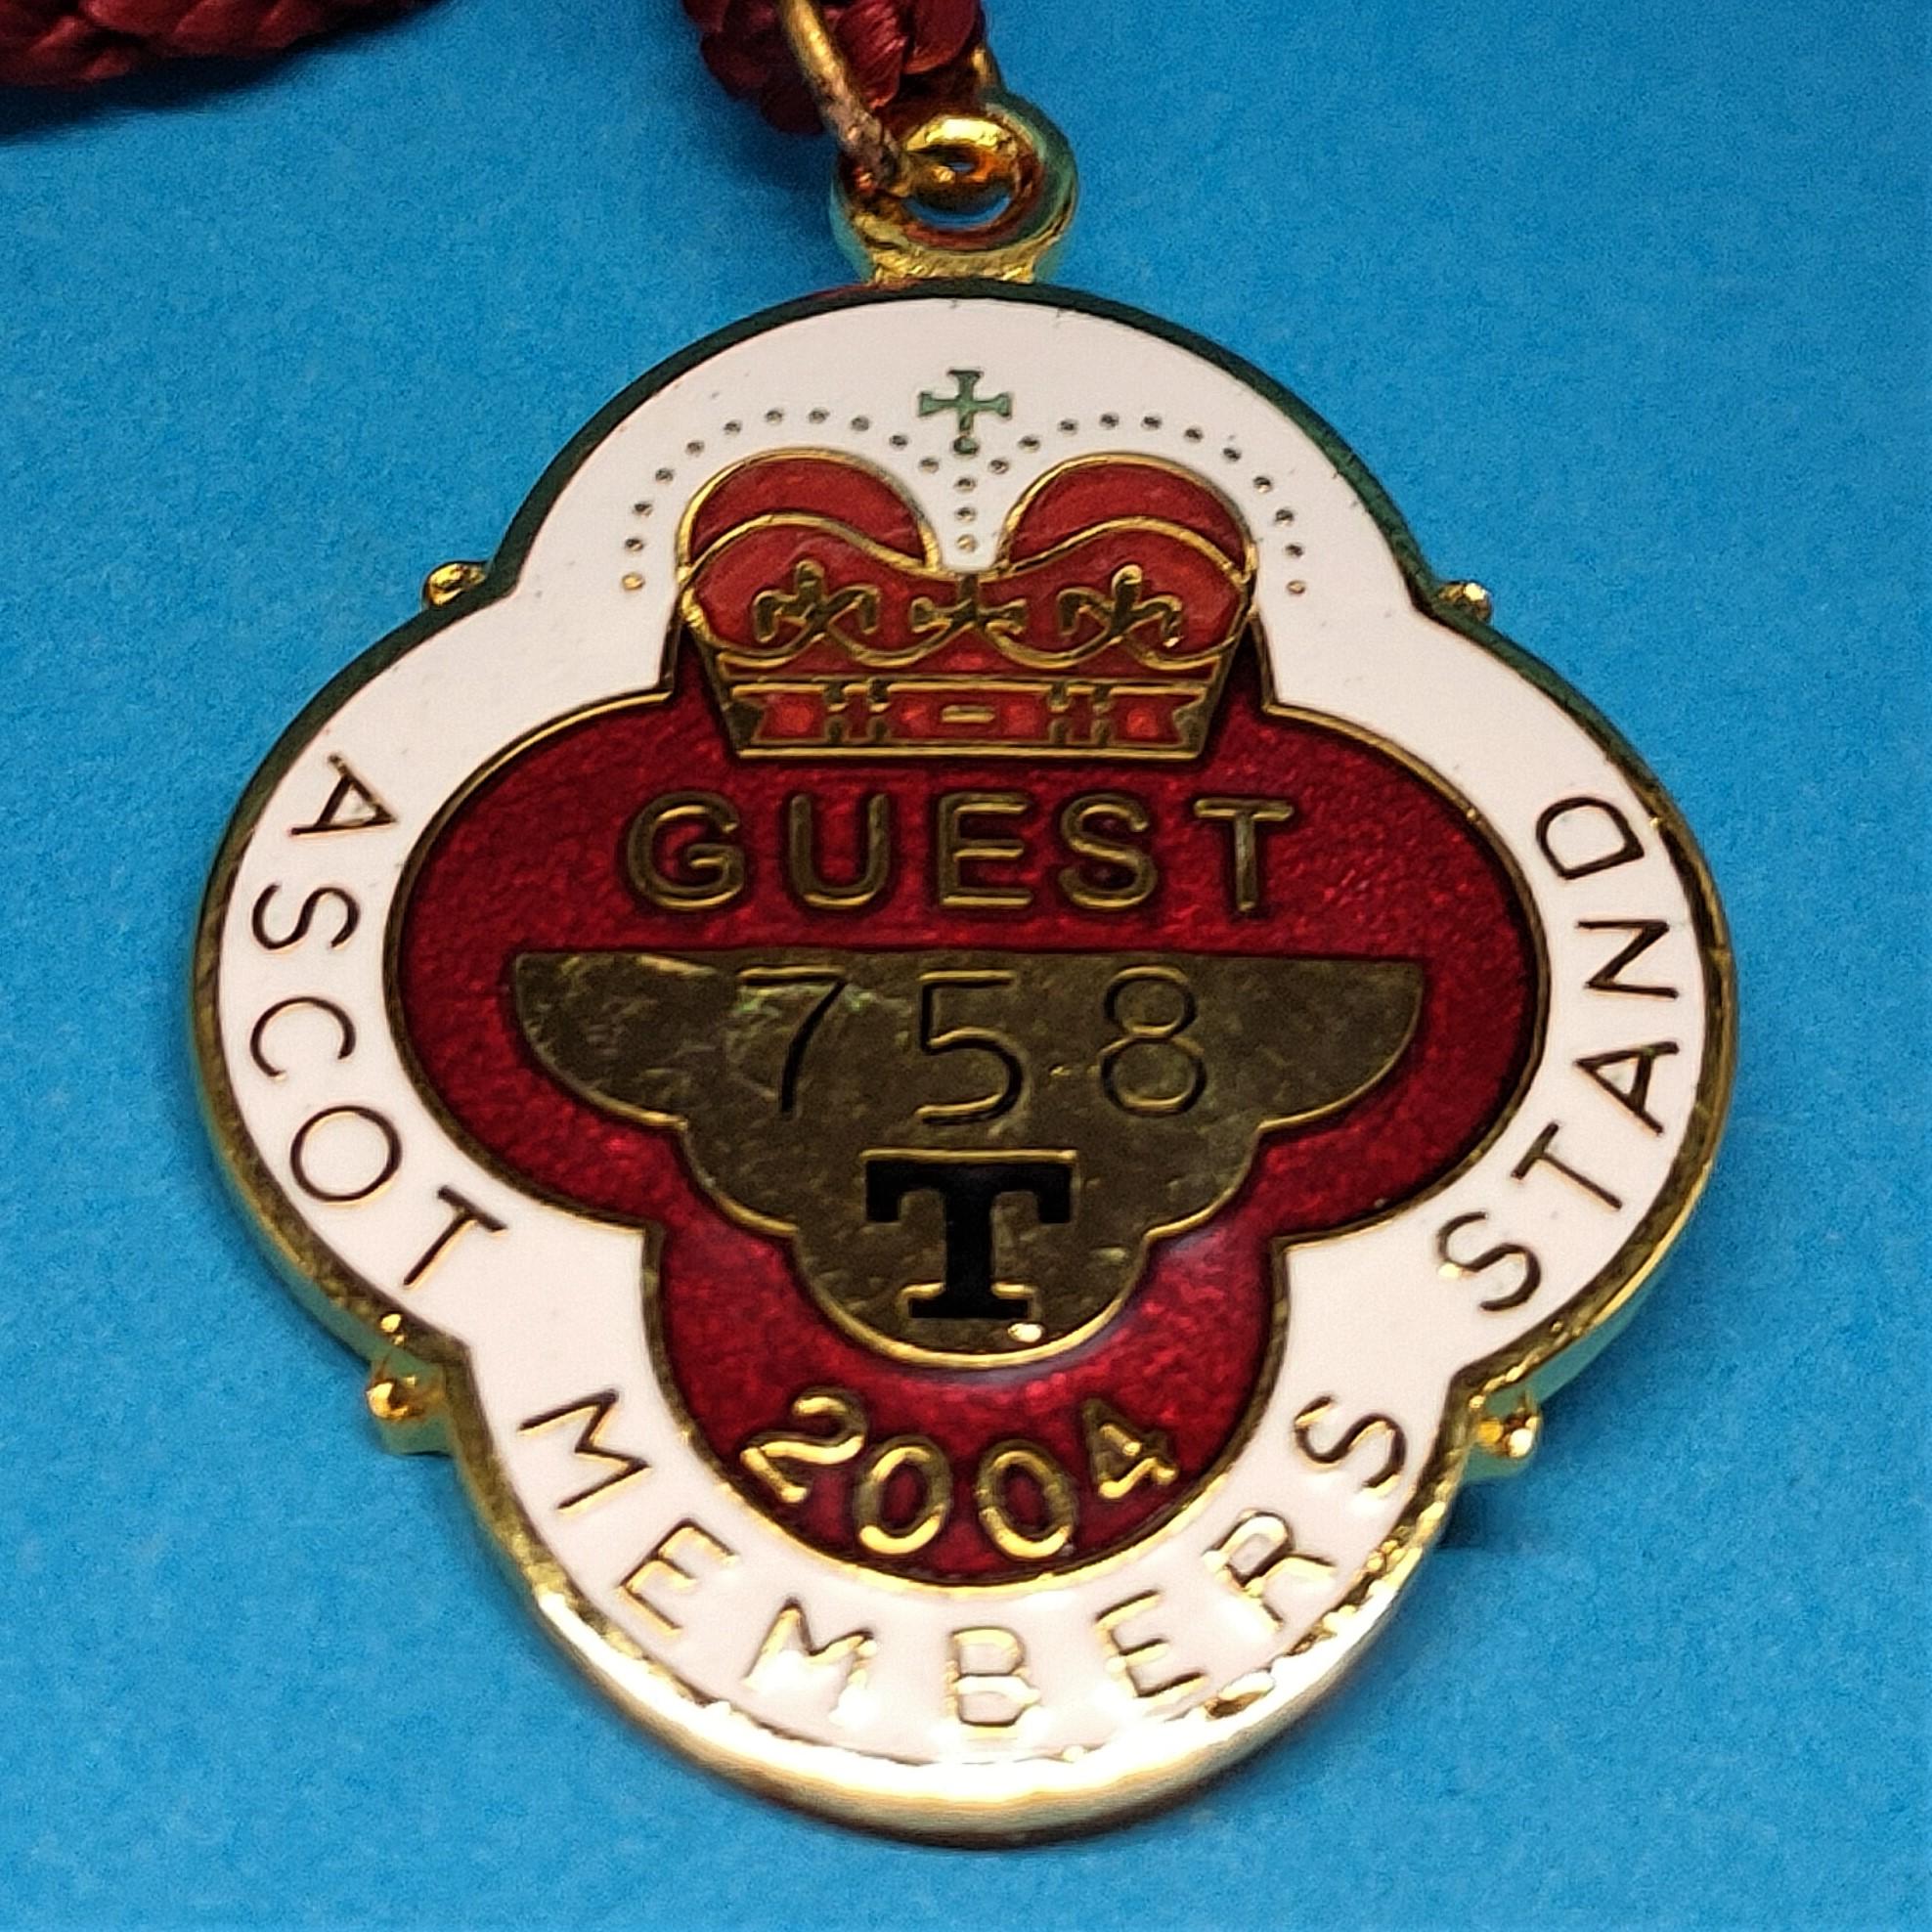 Ascot Guest 2004